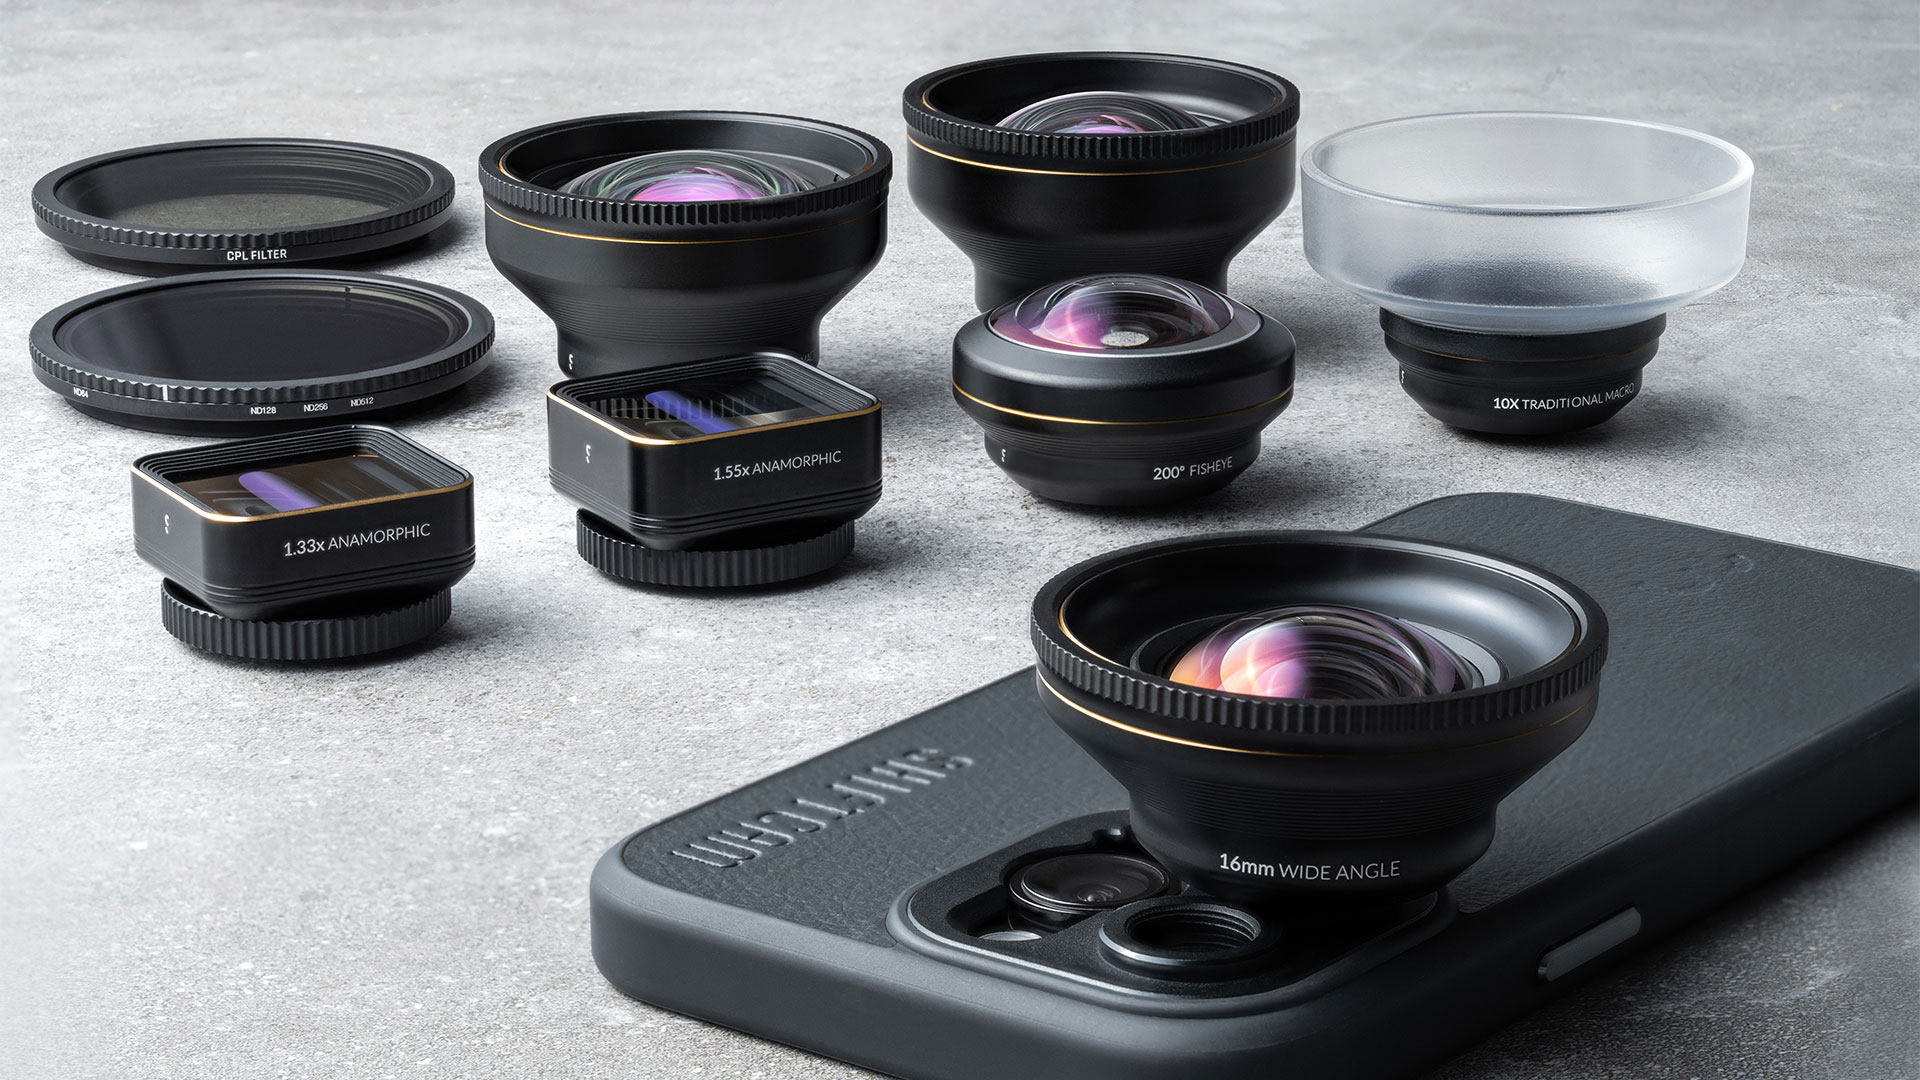 ShiftCam LensUltra Set of Lenses for Smartphones - Now on Kickstarter